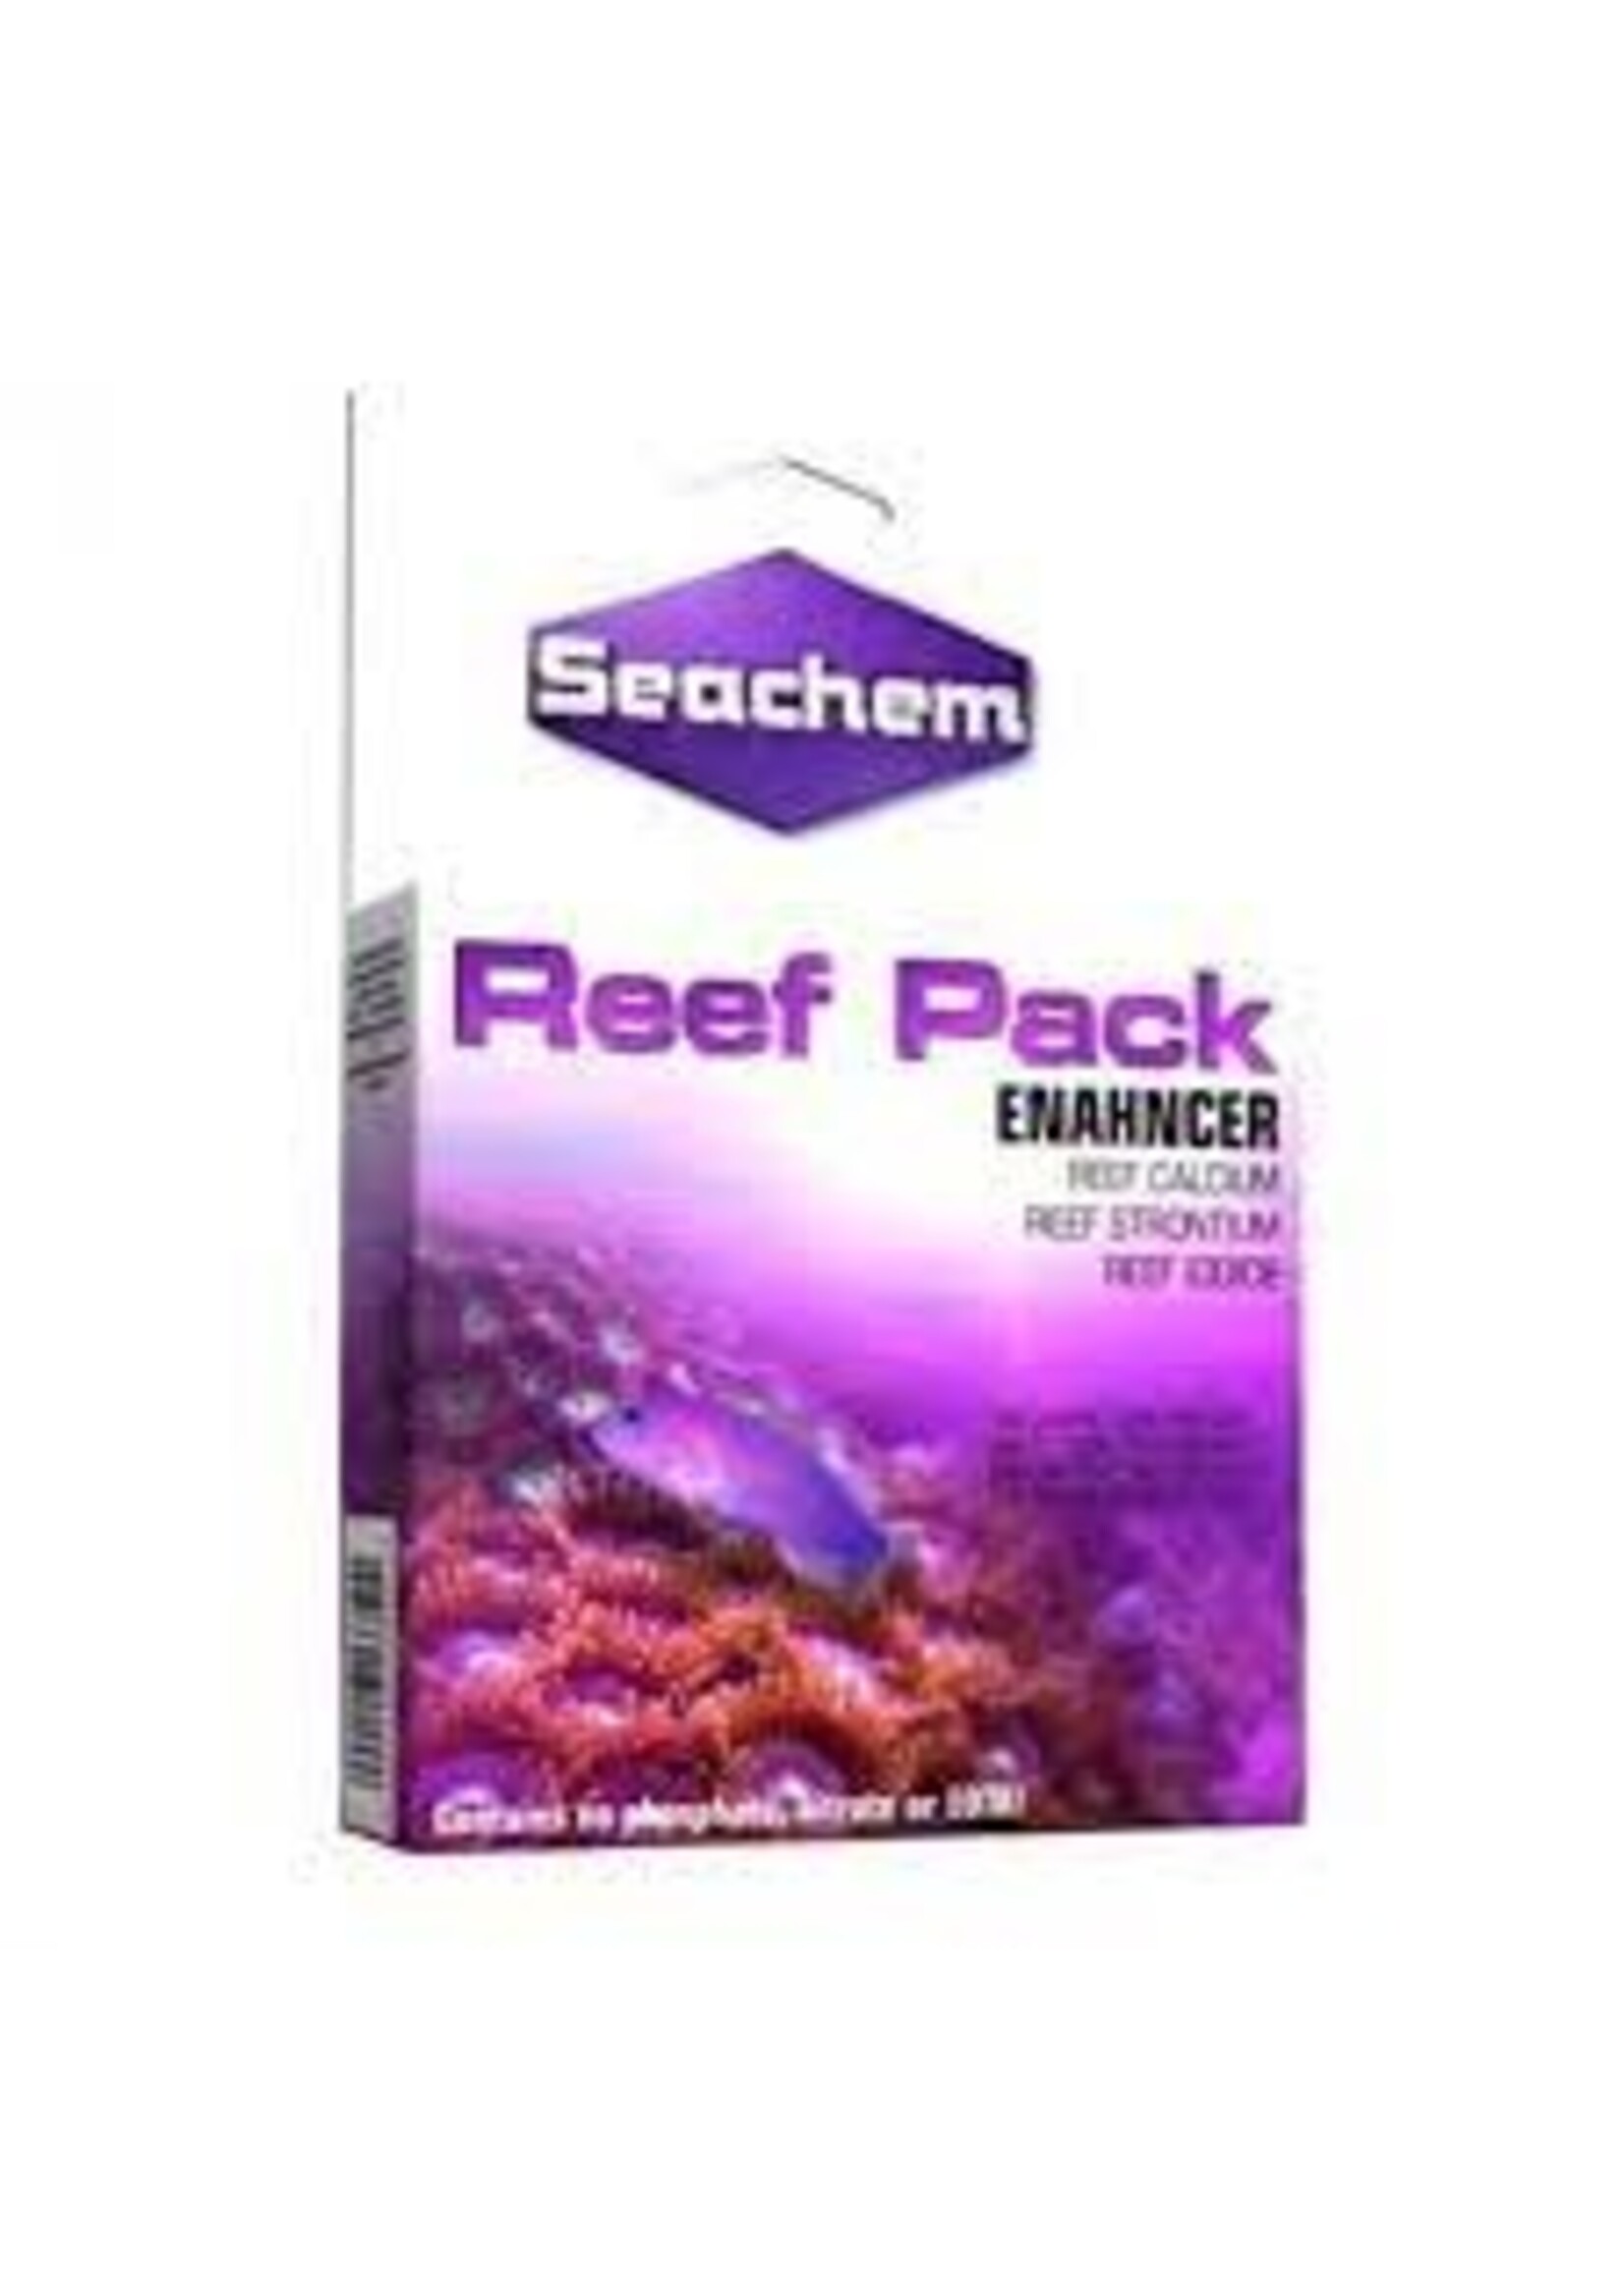 Seachem Seachem Reef Pack Enhancer  * Old Packaging *